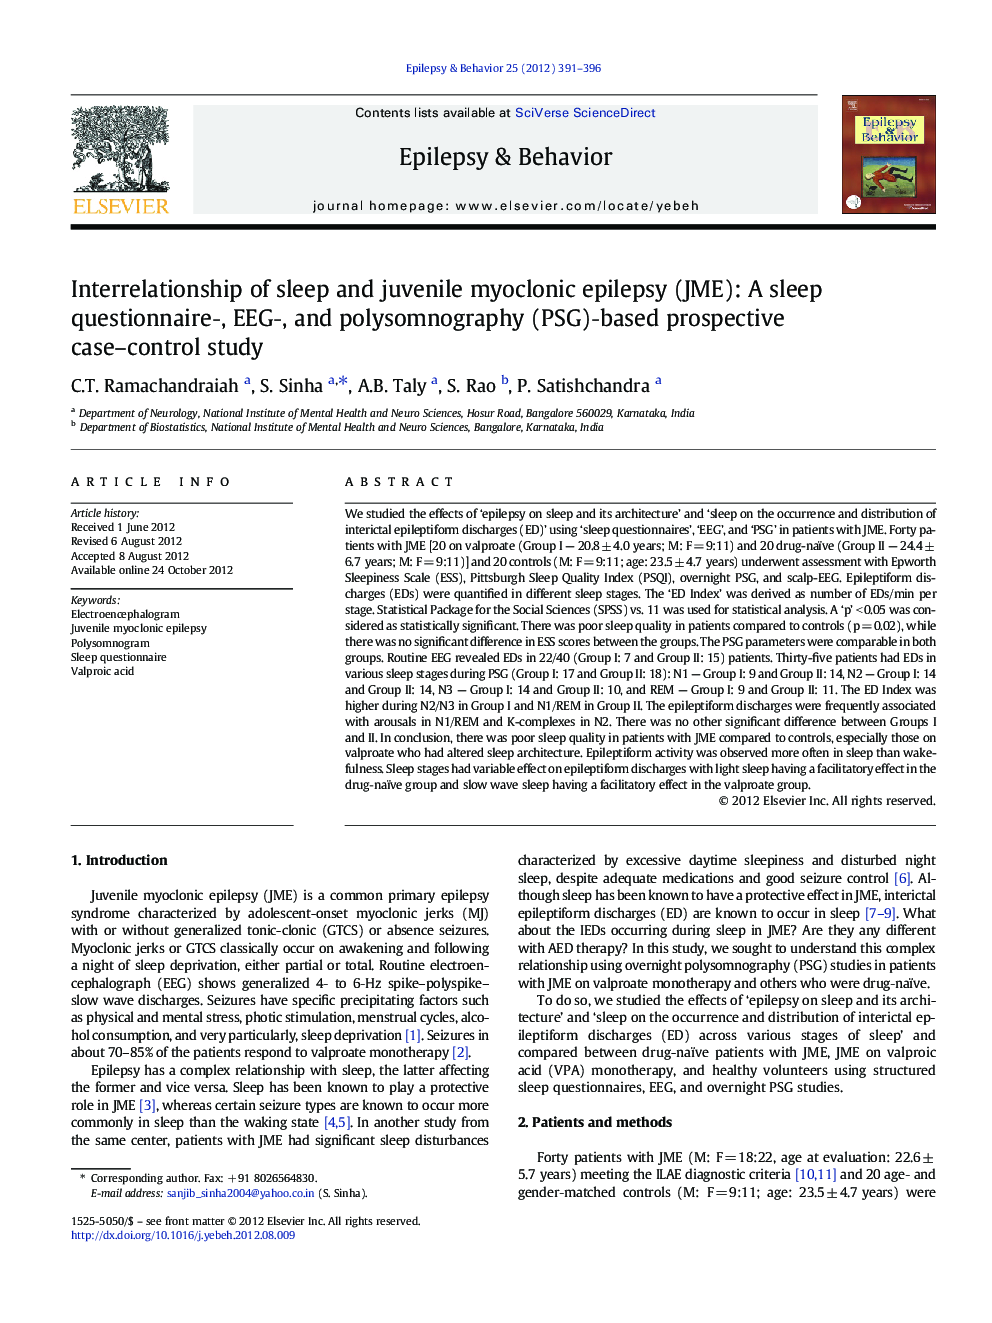 Interrelationship of sleep and juvenile myoclonic epilepsy (JME): A sleep questionnaireâ, EEGâ, and polysomnography (PSG)âbased prospective case-control study